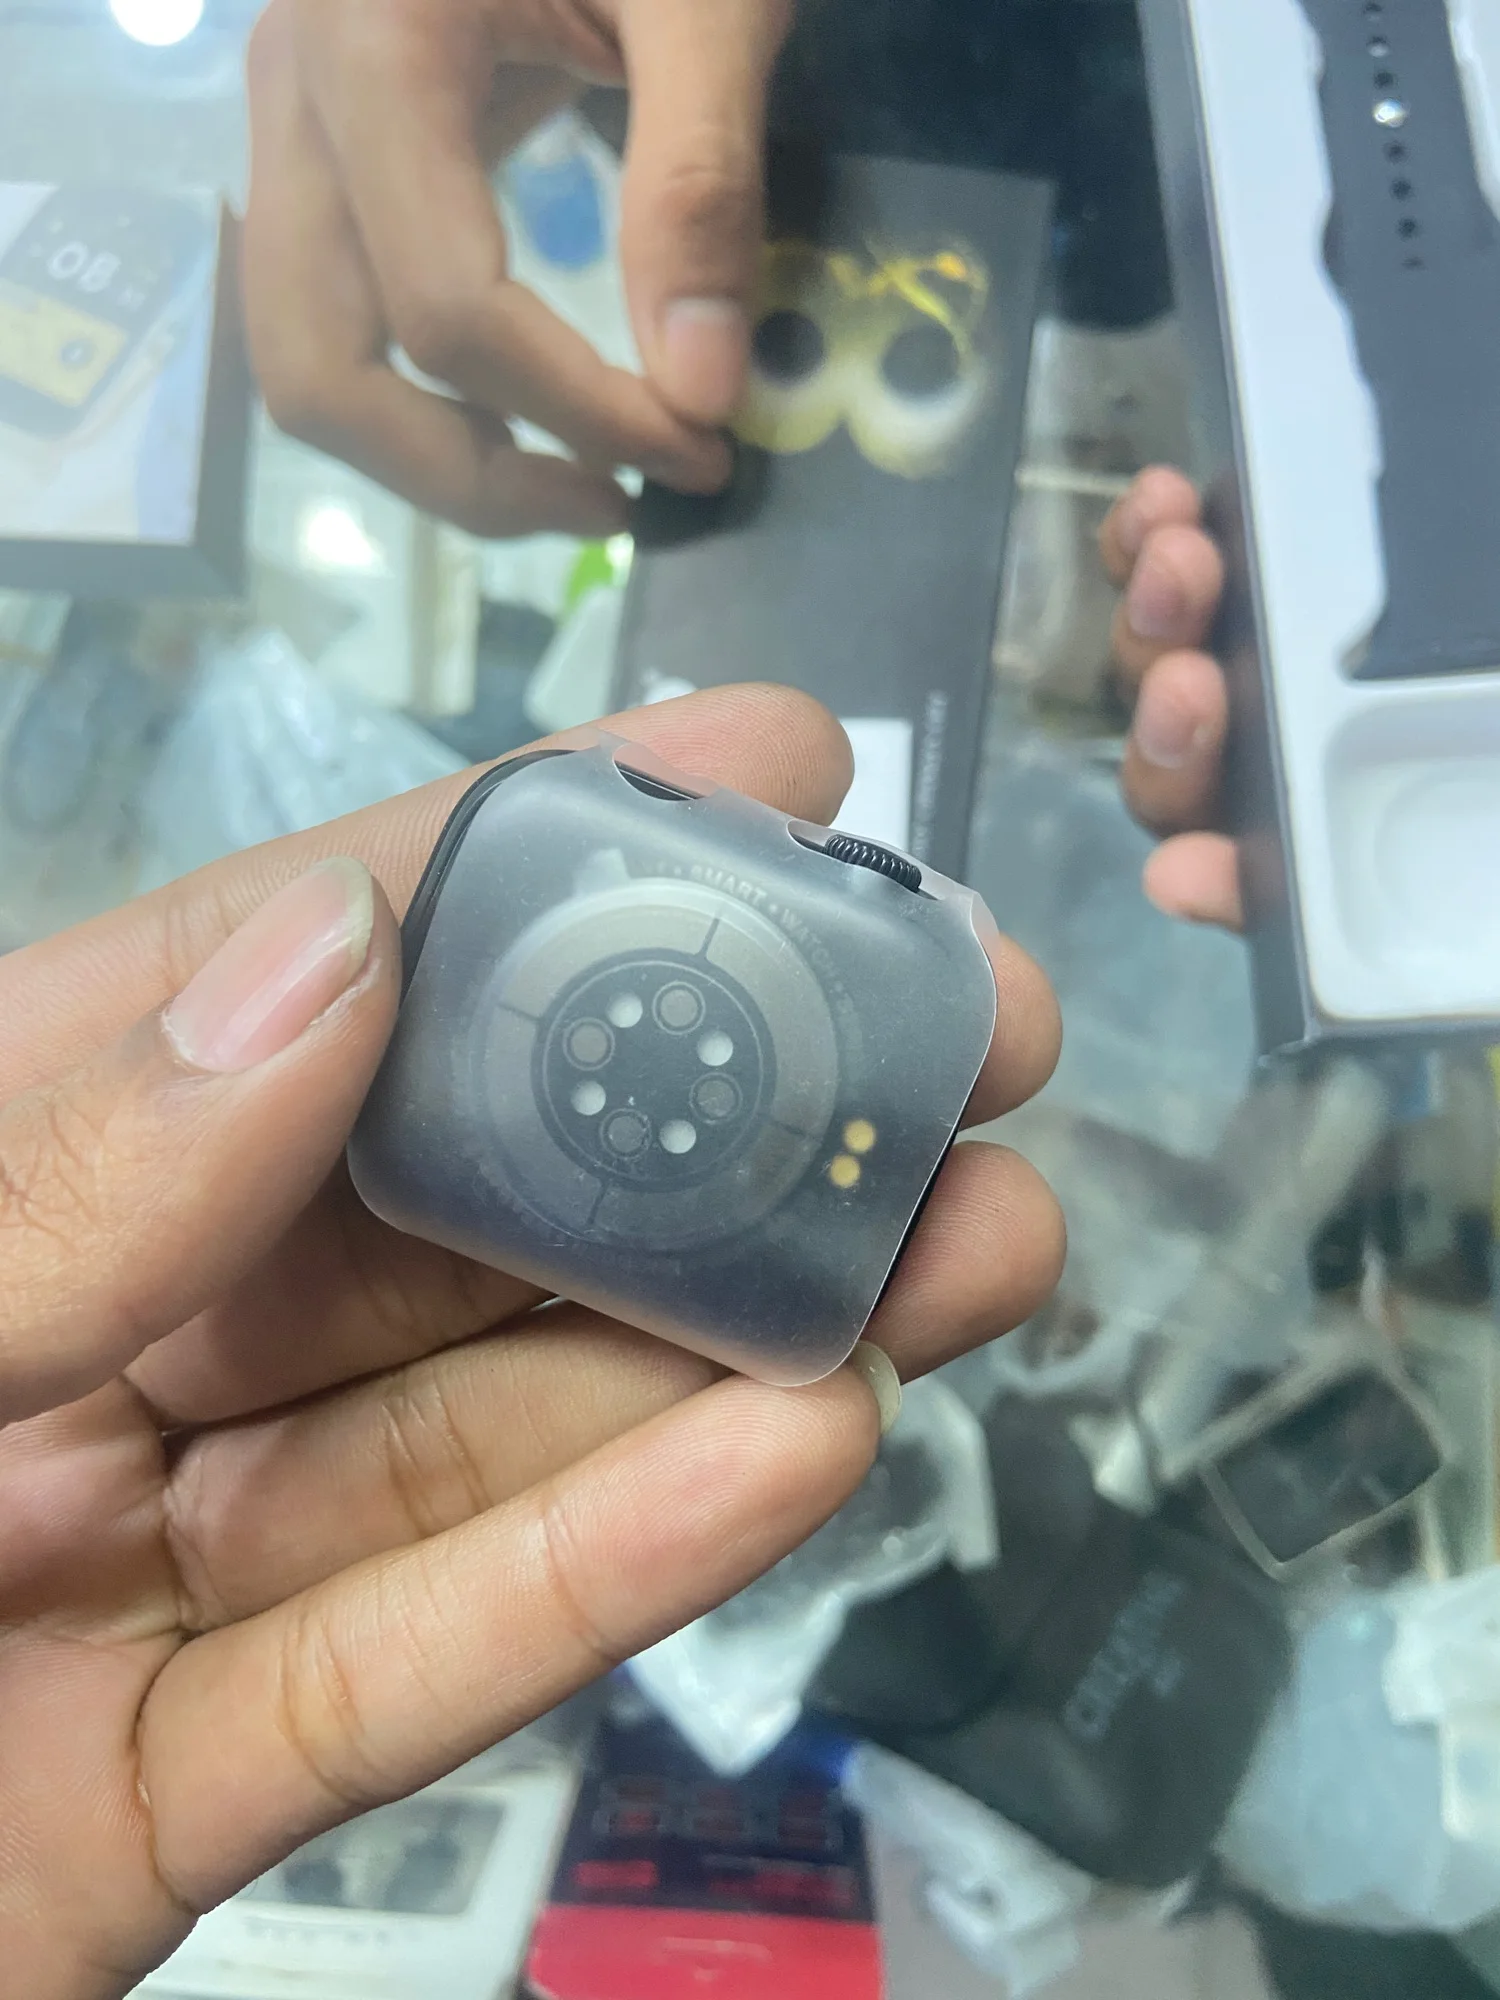 Geeoo W30 Bluetooth Calling Smart Watch best Price In Bangladesh